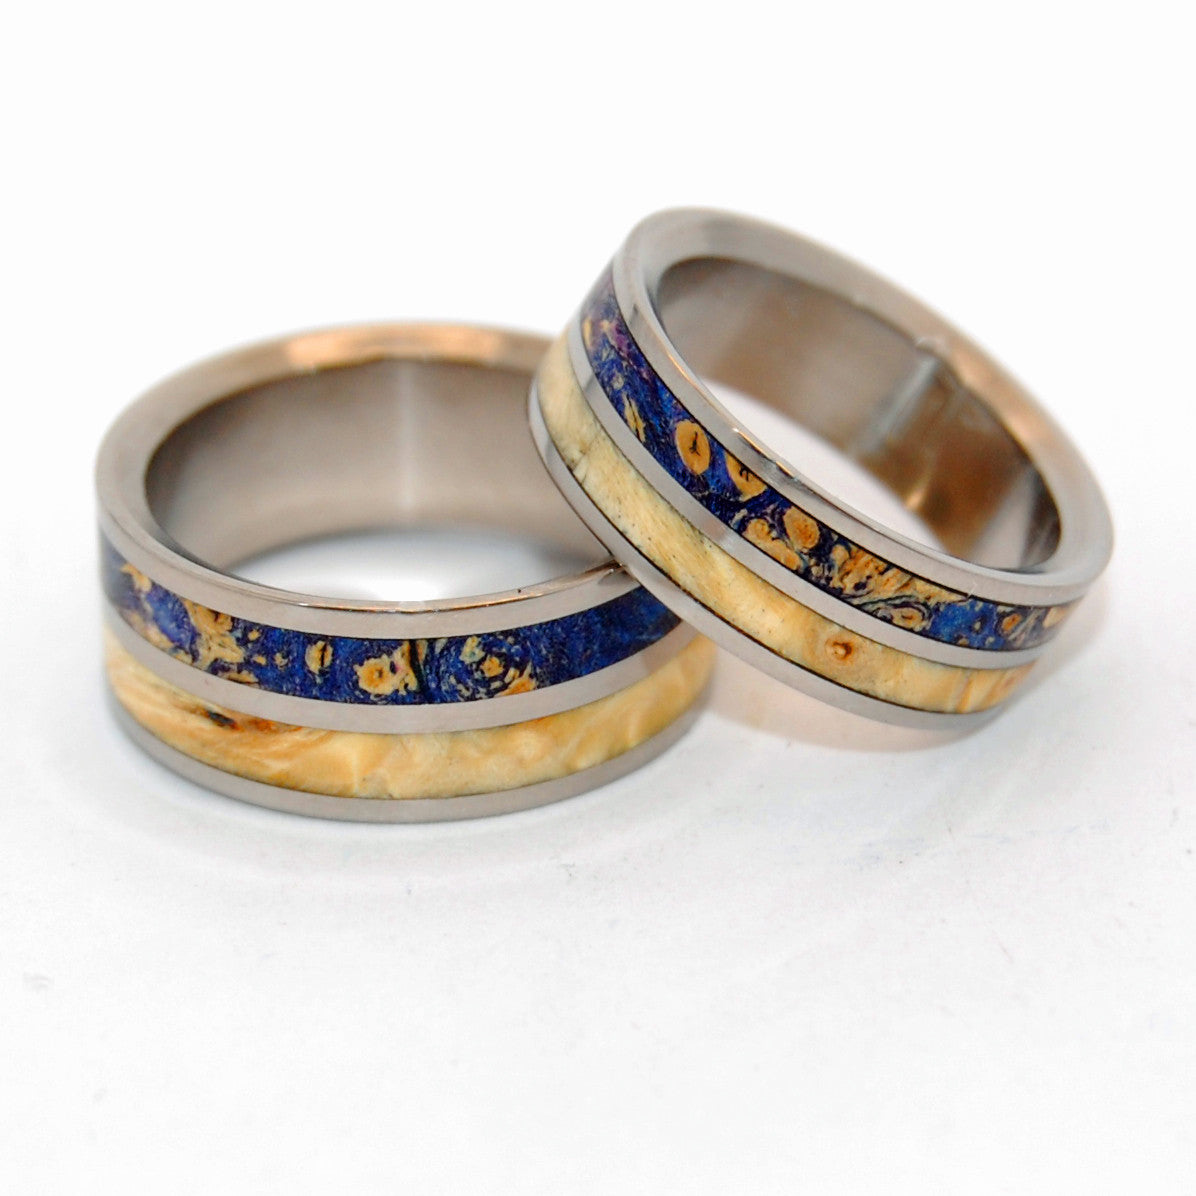 MY TWIN HEART | Box Elder Wood Titanium Wedding Rings Set - Minter and Richter Designs